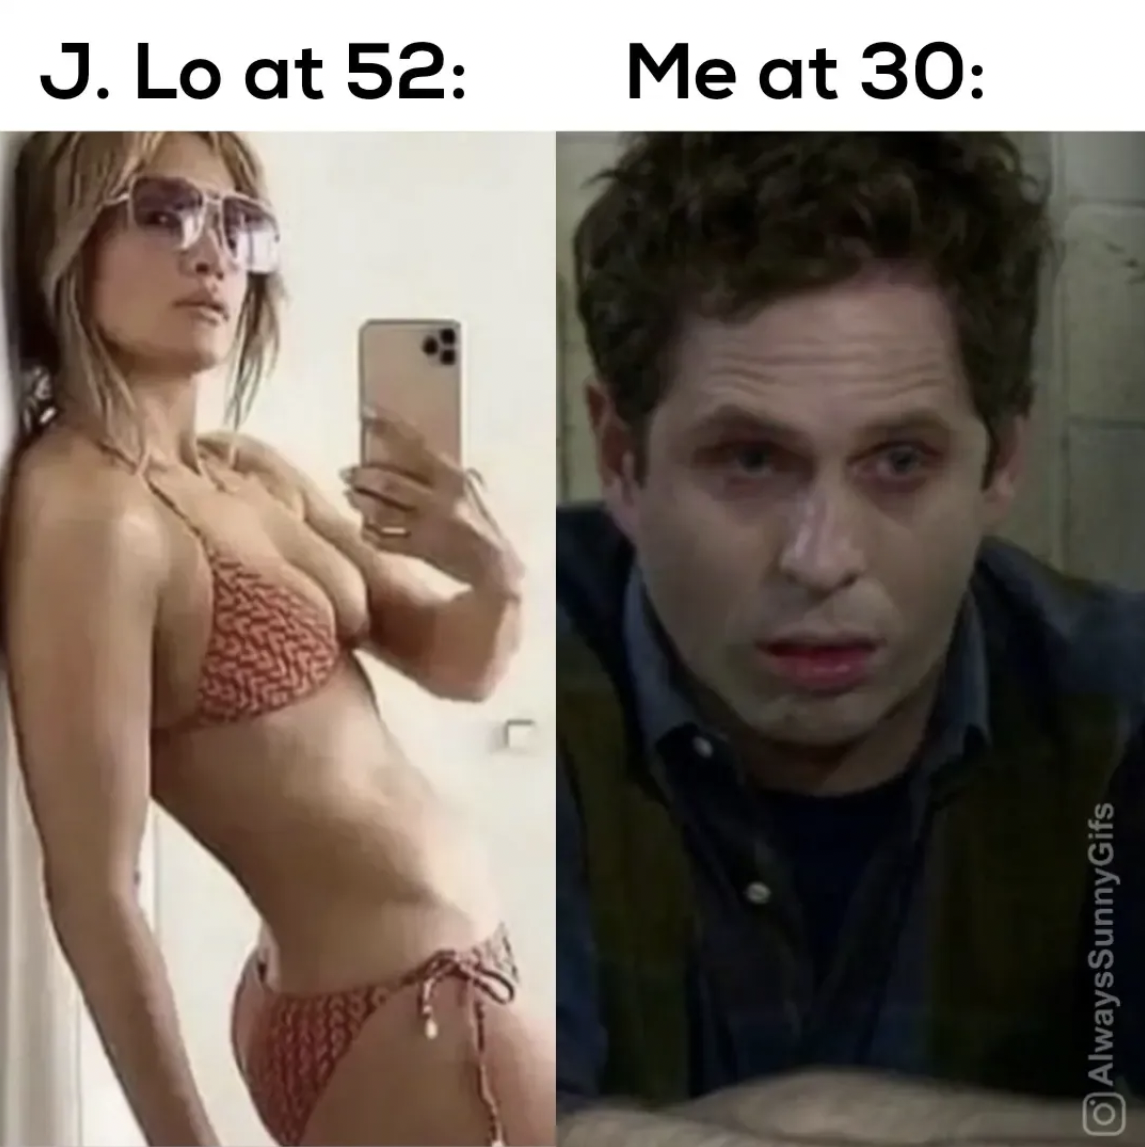 It's Always Sunny in Philadelphia memes - jennifer lopez bikini - J. Lo at 52 Se Me at 30 AlwaysSunny Gifs